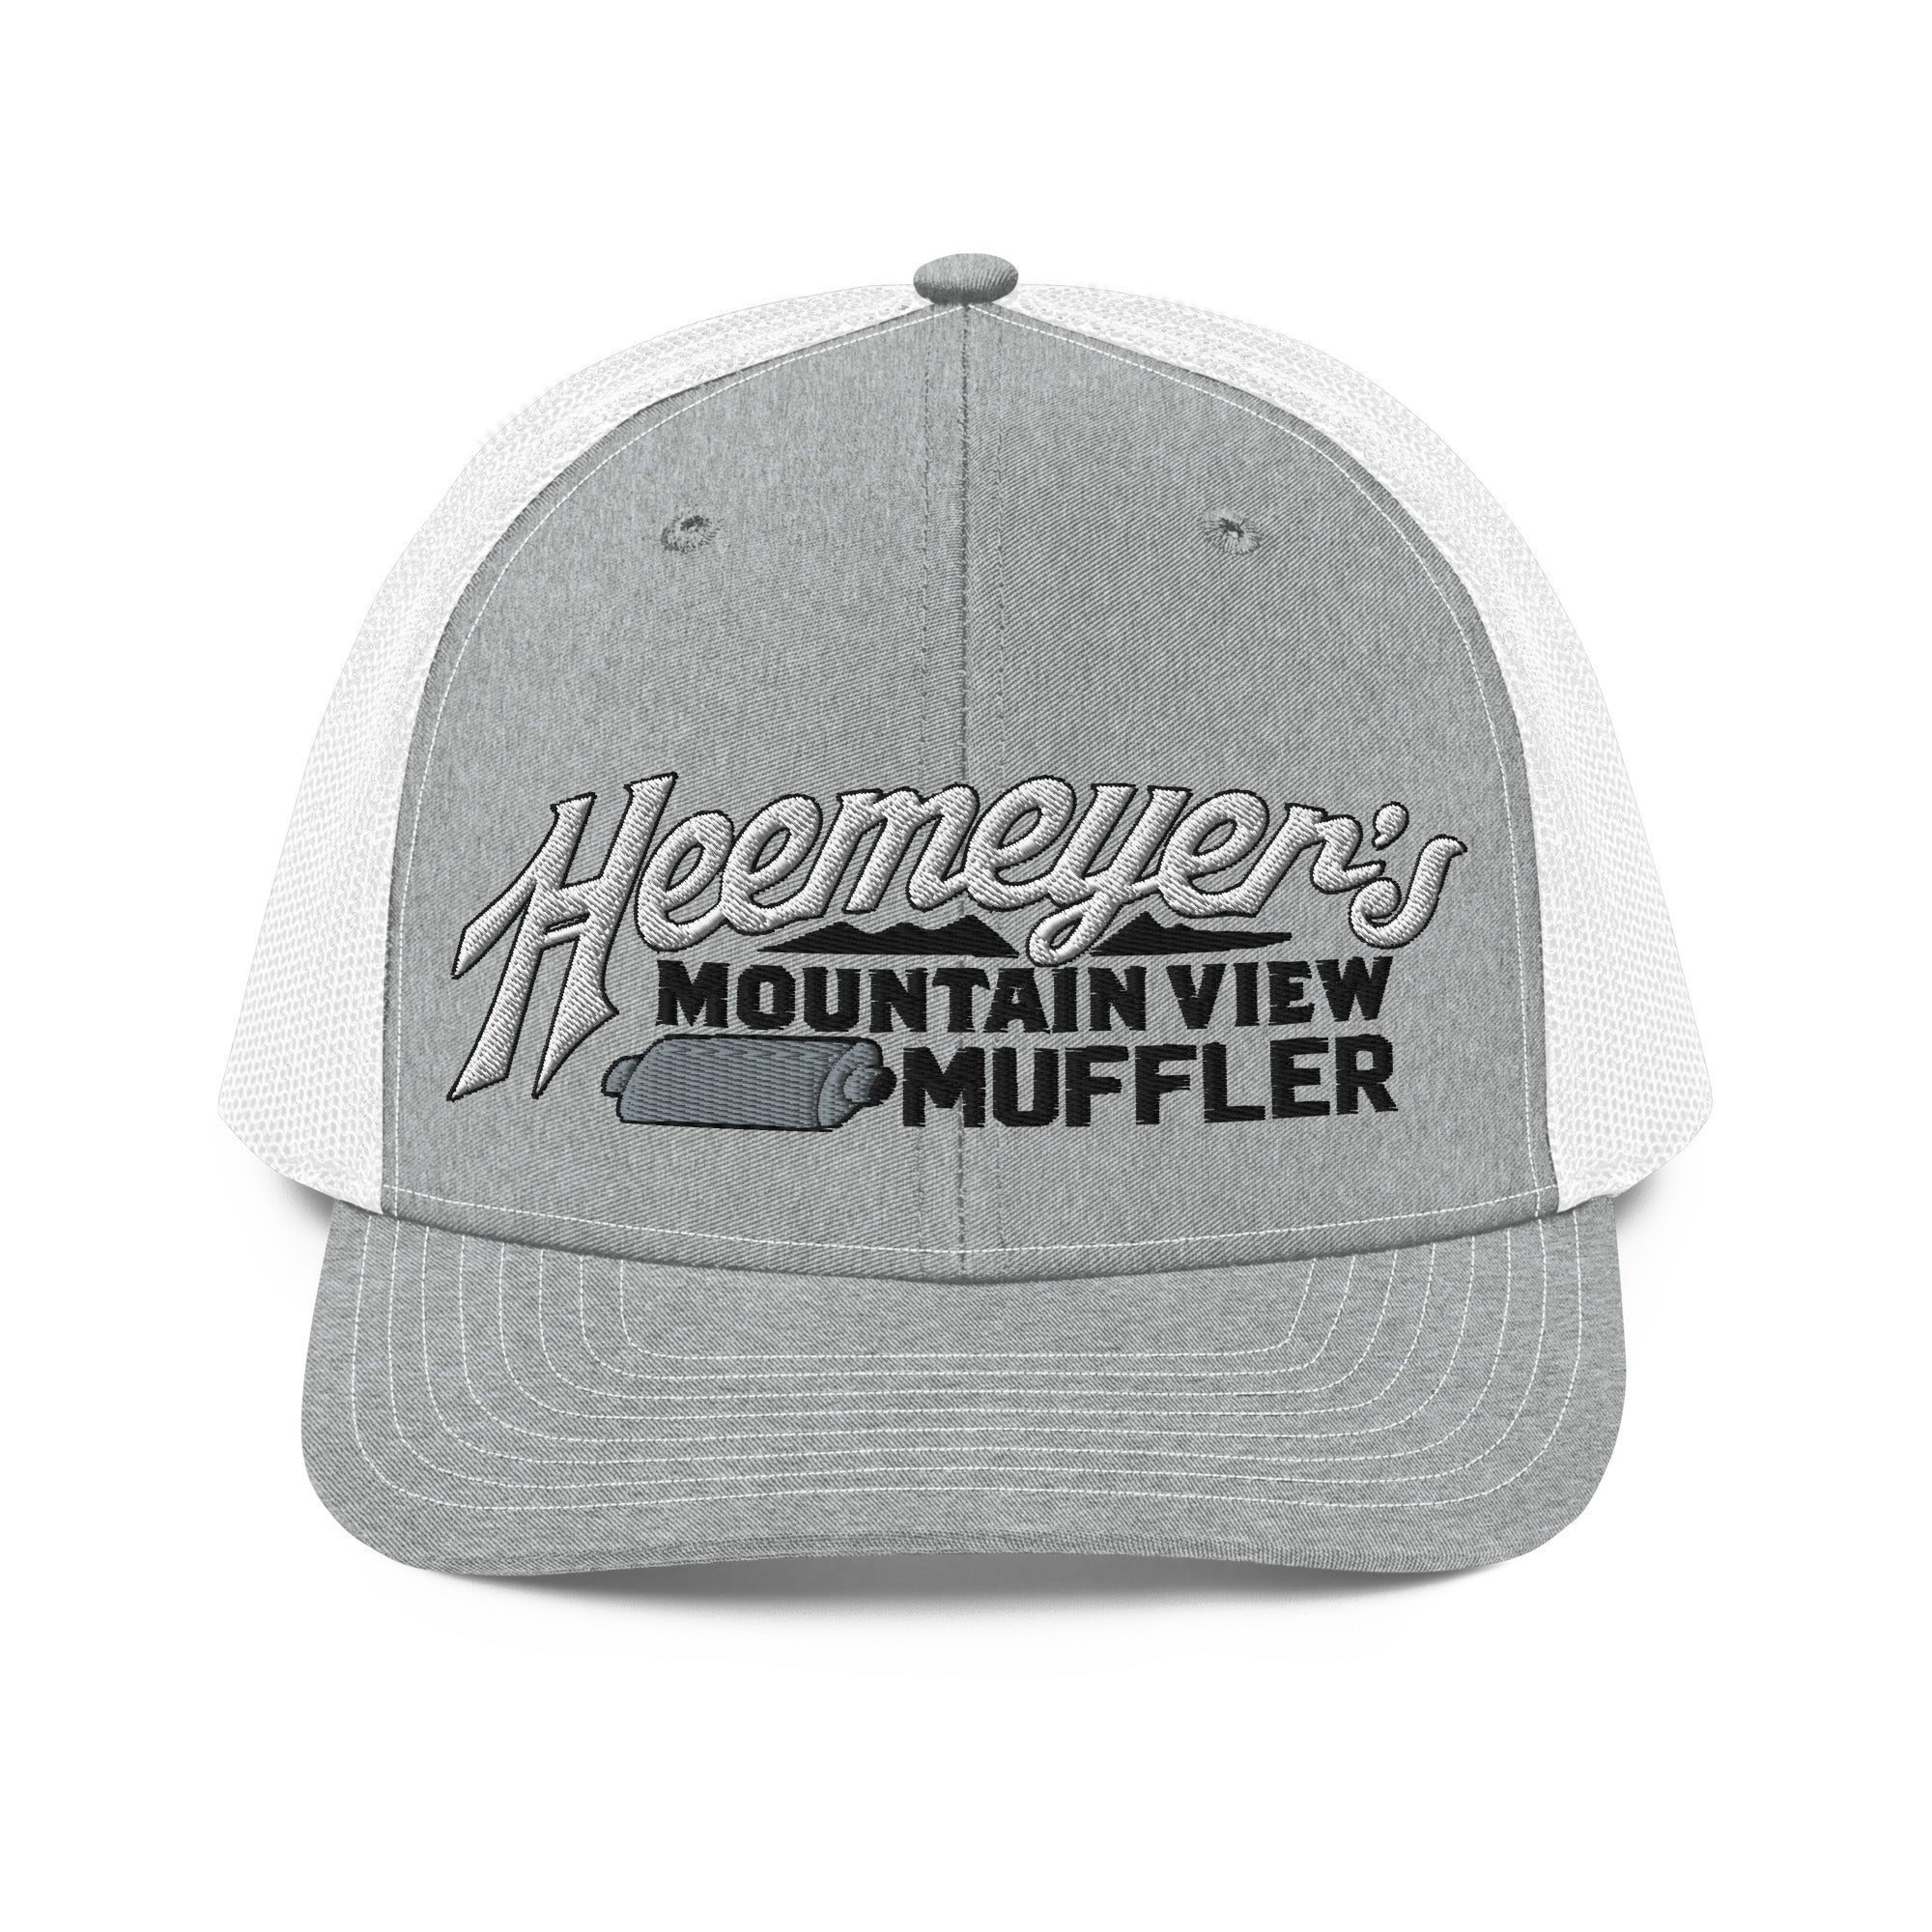 Heemeyer's Mountain View Muffler 6-Panel Trucker Cap